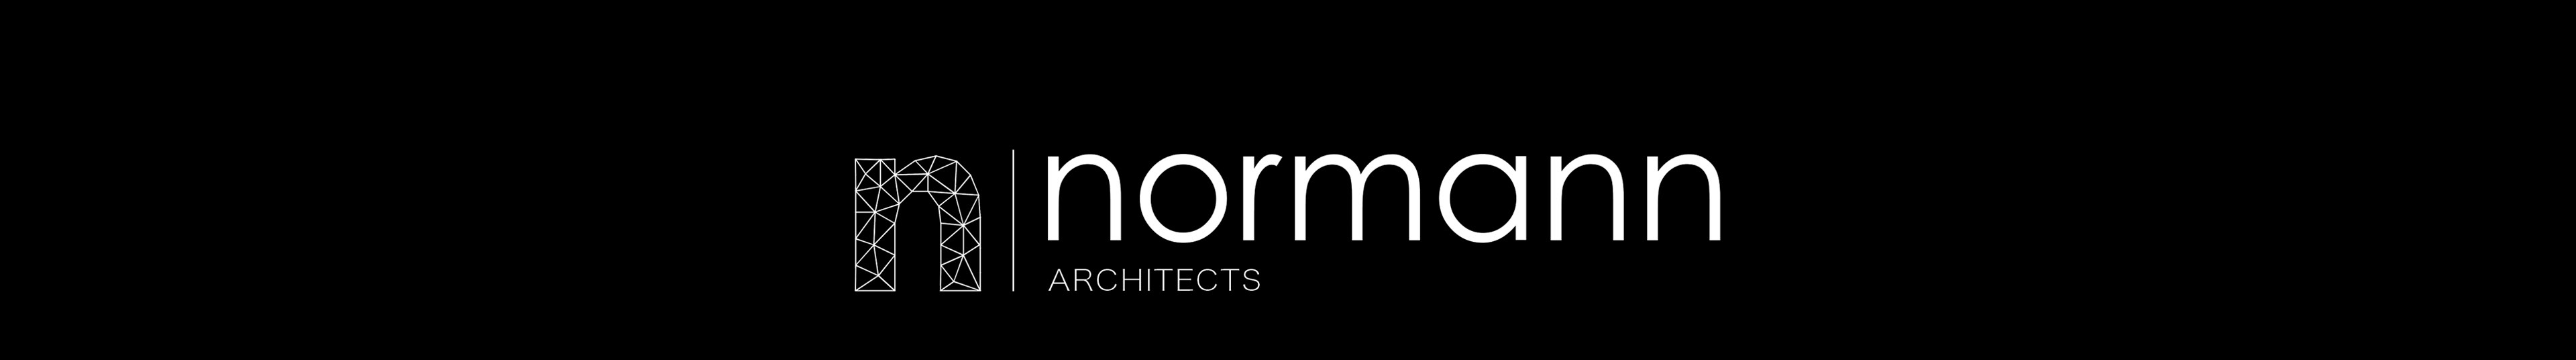 NORMANN architectss profilbanner